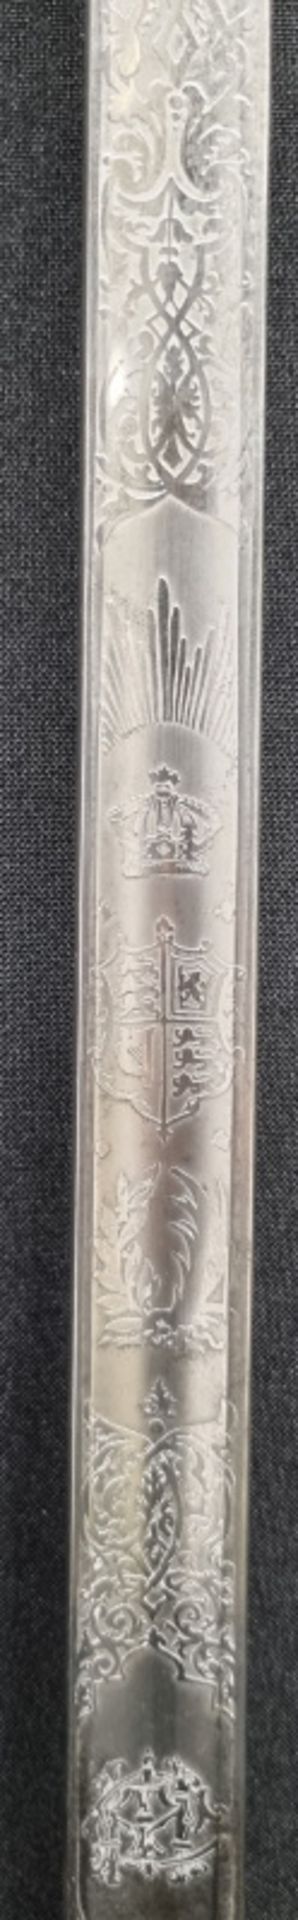 S J Pillin Royal Engineers Ceremonial Sword - serial number 100247 - Image 8 of 10